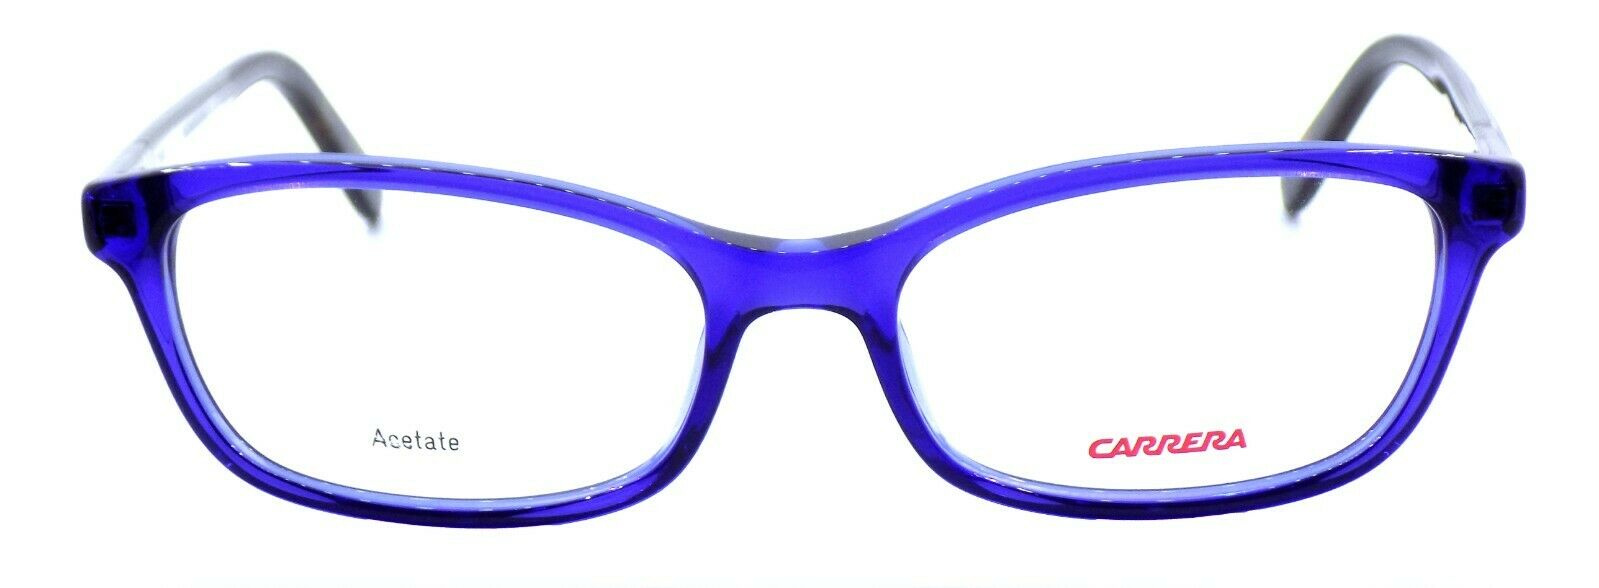 2-Carrera CA6647 QLD Women's Eyeglasses Frames 52-17-140 Blue + CASE-762753670533-IKSpecs